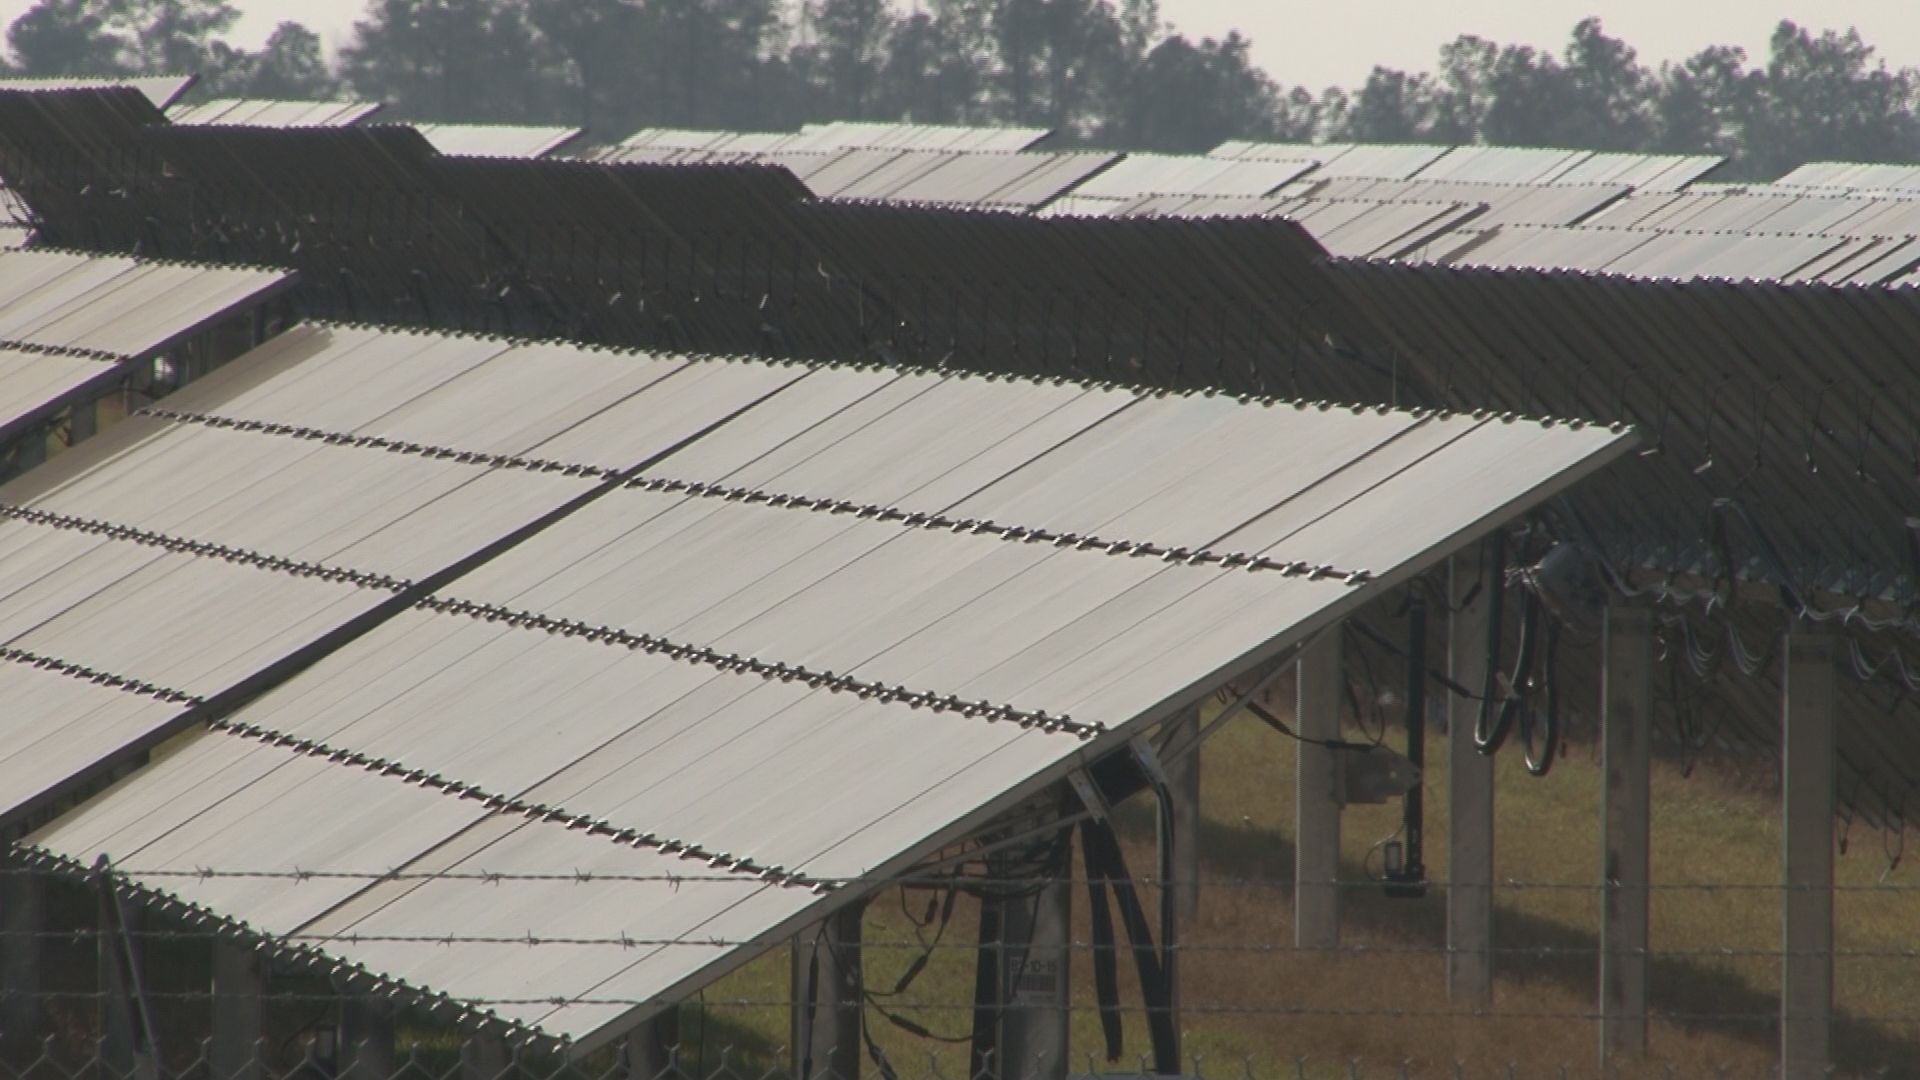 Taylor Farms' Dallas facility spends $2.1 million on solar panel